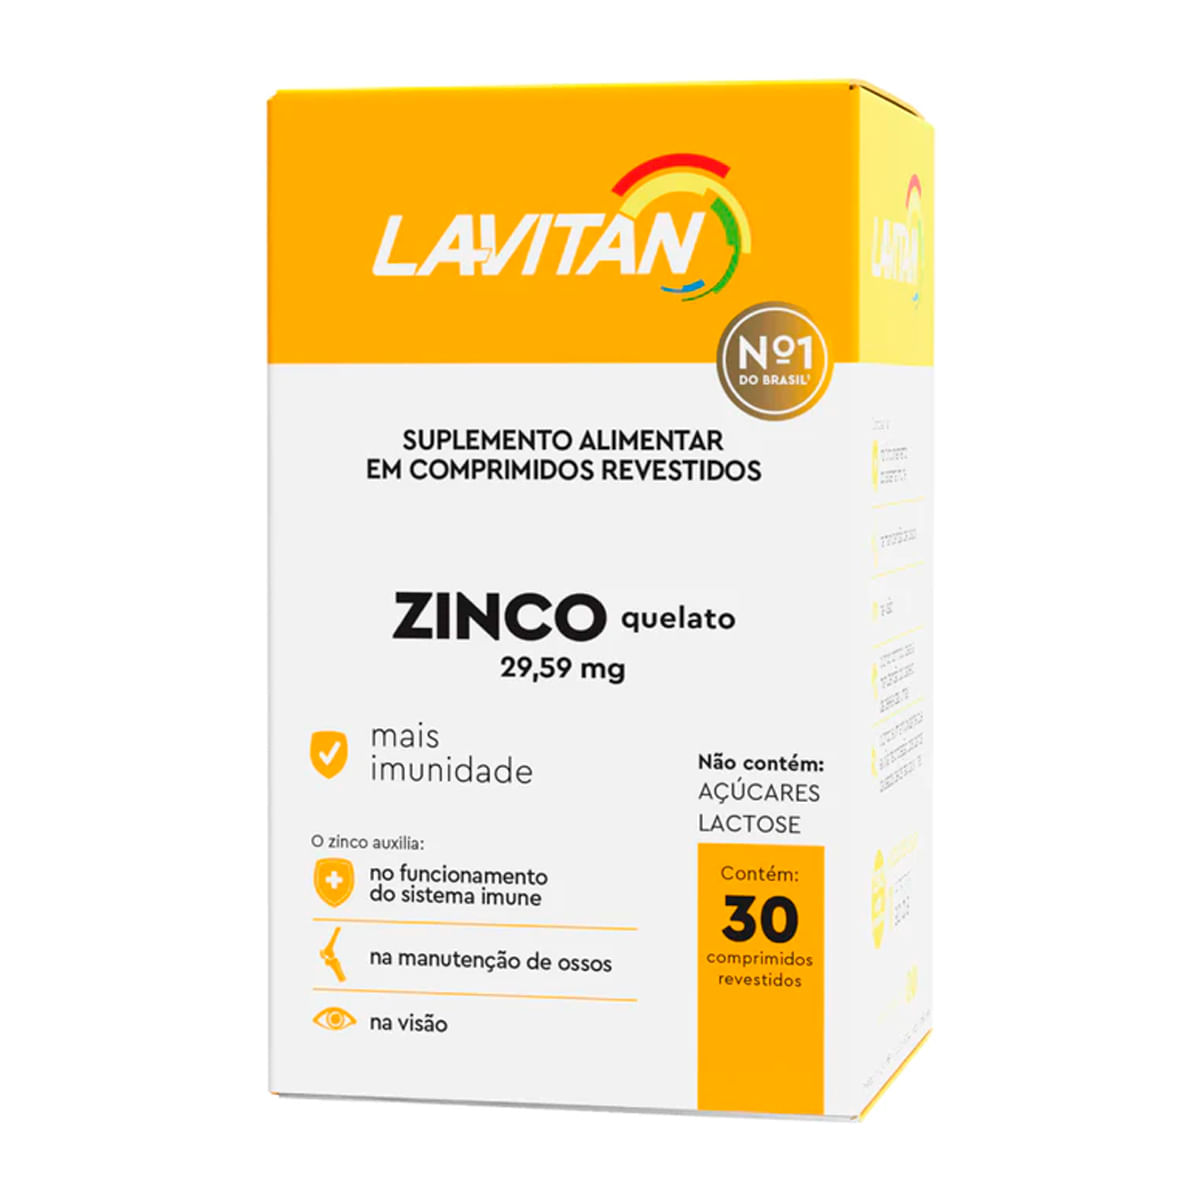 Lavitan Zinco Quelato 29,59 mg Suplemento Alimentar com 30 Comprimidos Revestidos CIMED